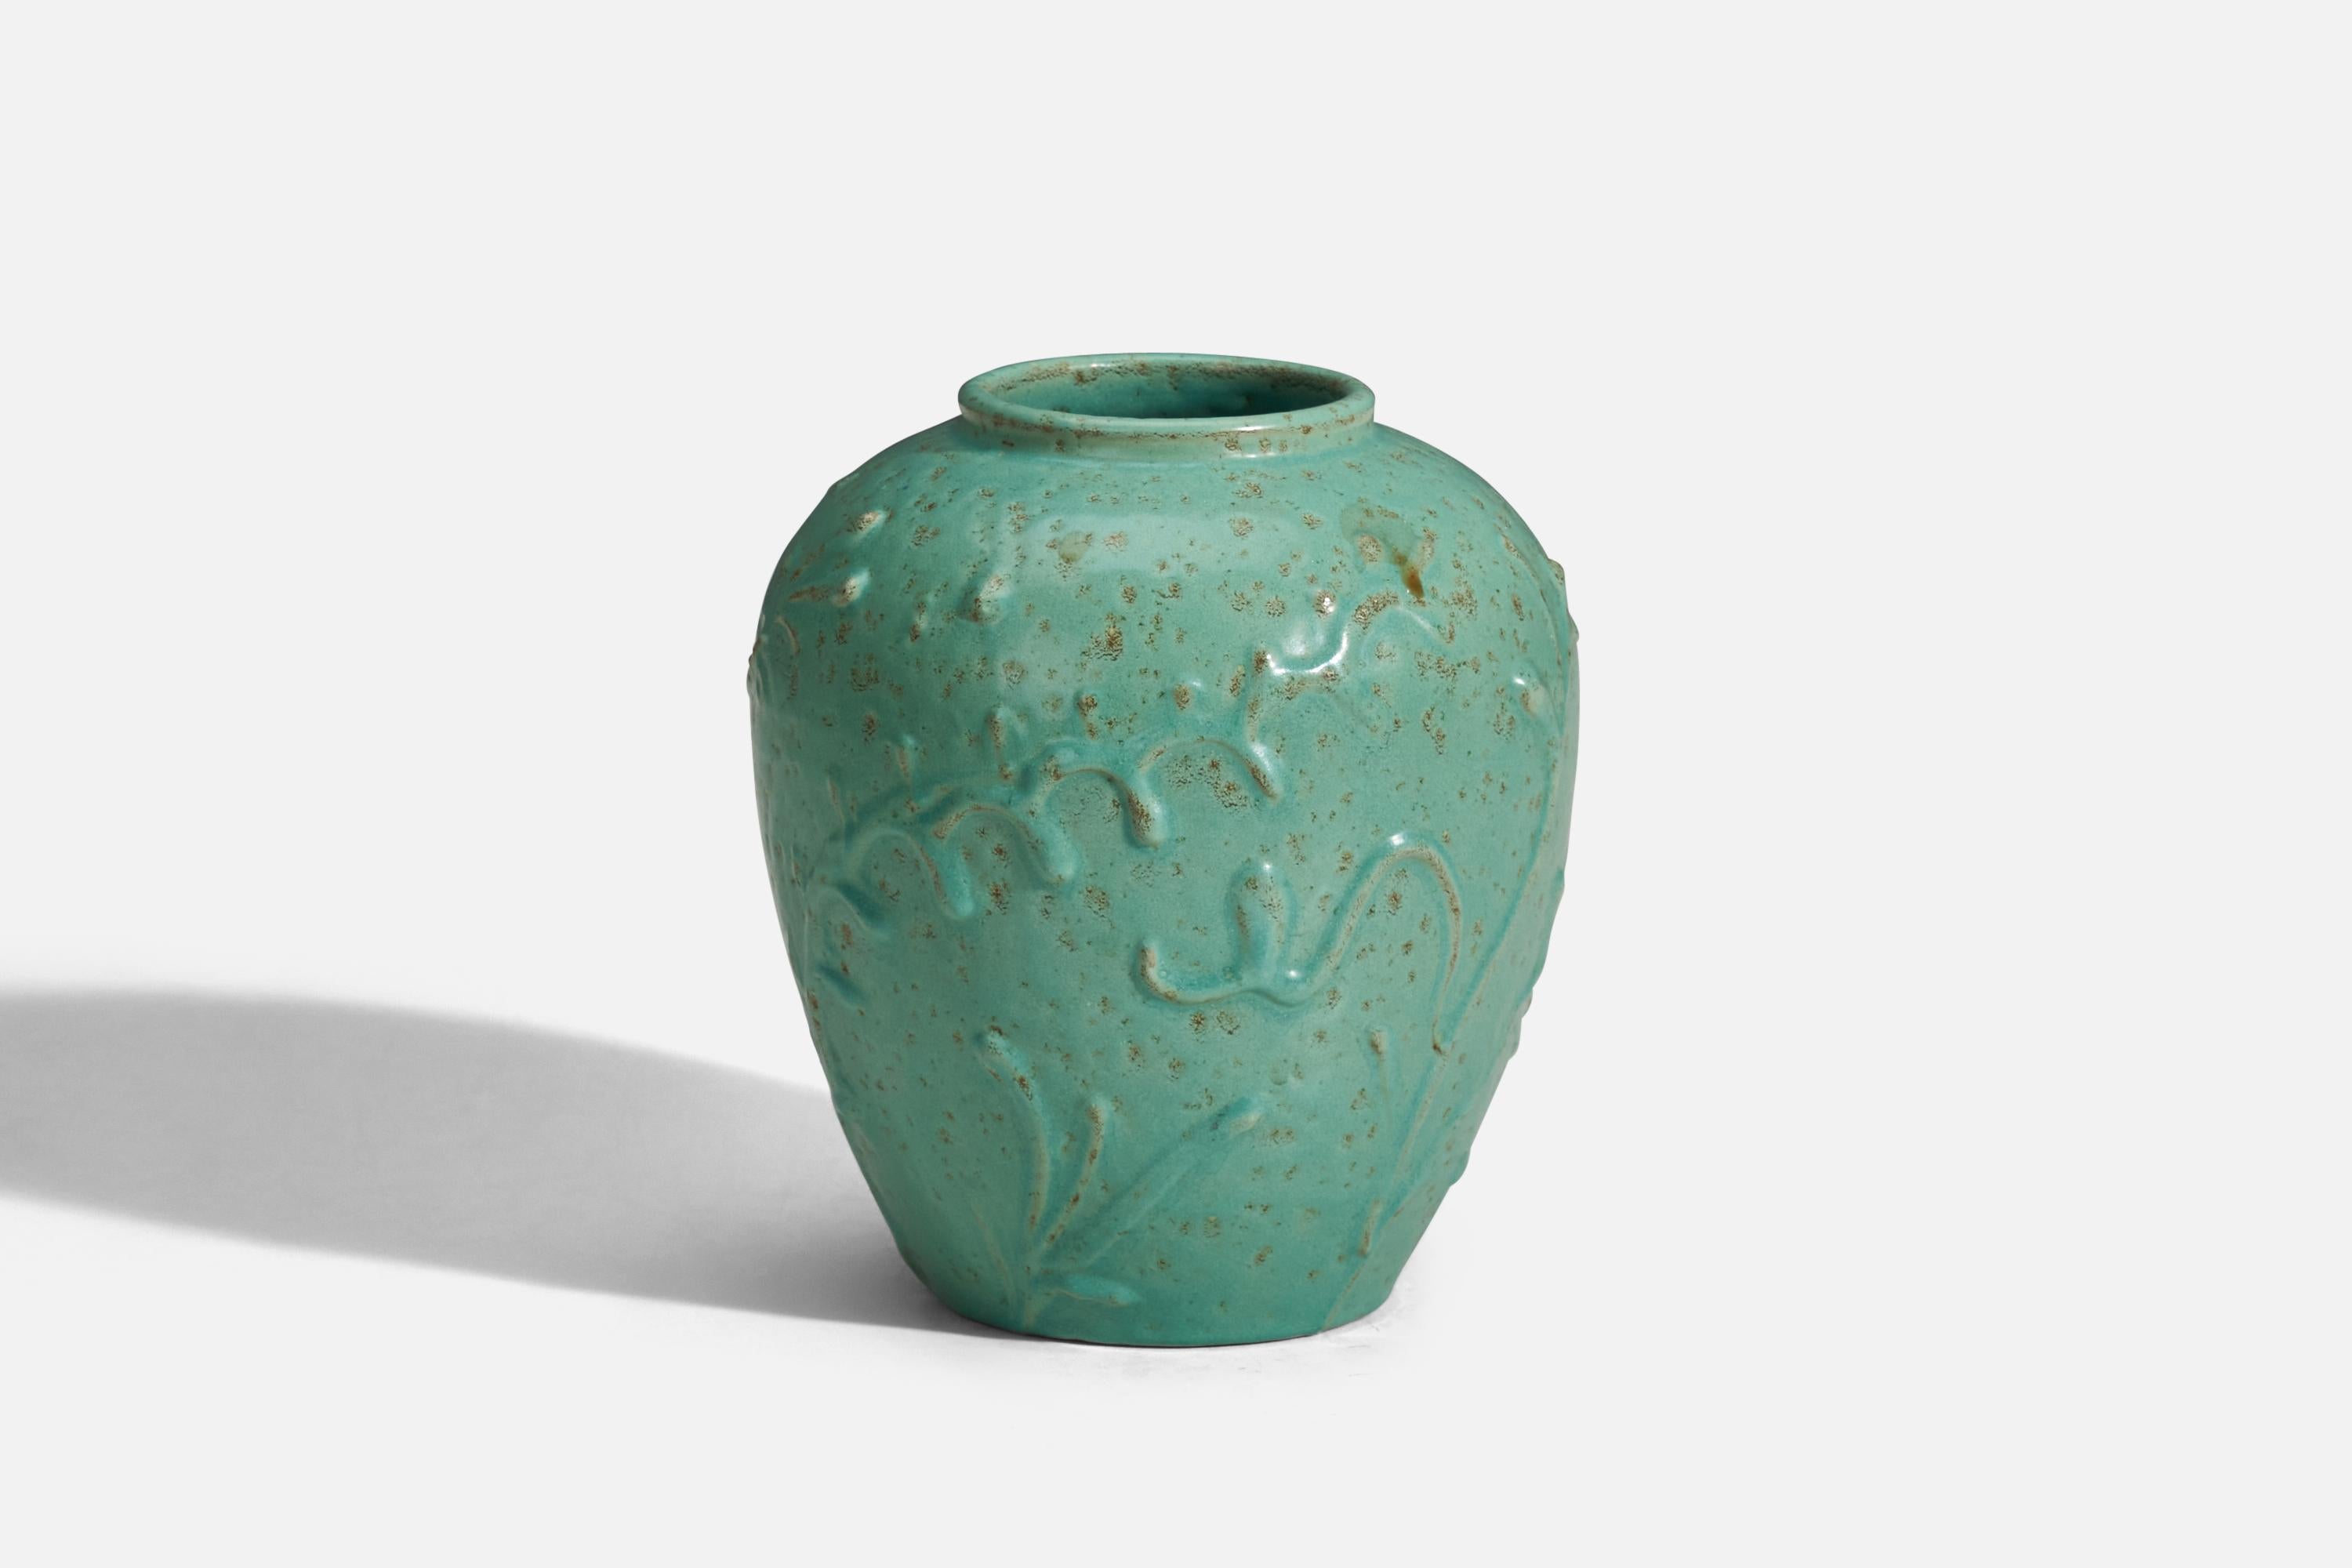 A green glazed earthenware vase designed and produced by Nittsjö, Sweden, 1940s.